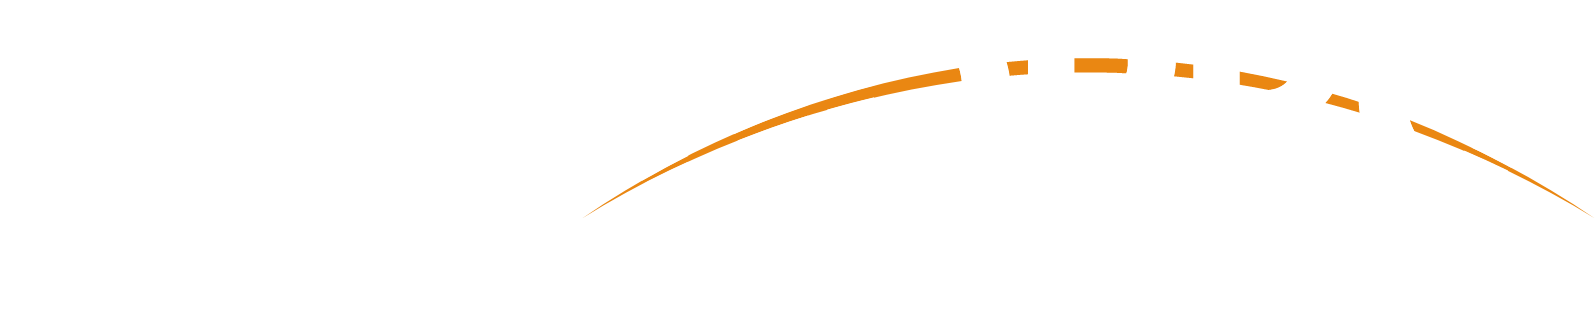 TechnoPro Holdings logo large for dark backgrounds (transparent PNG)